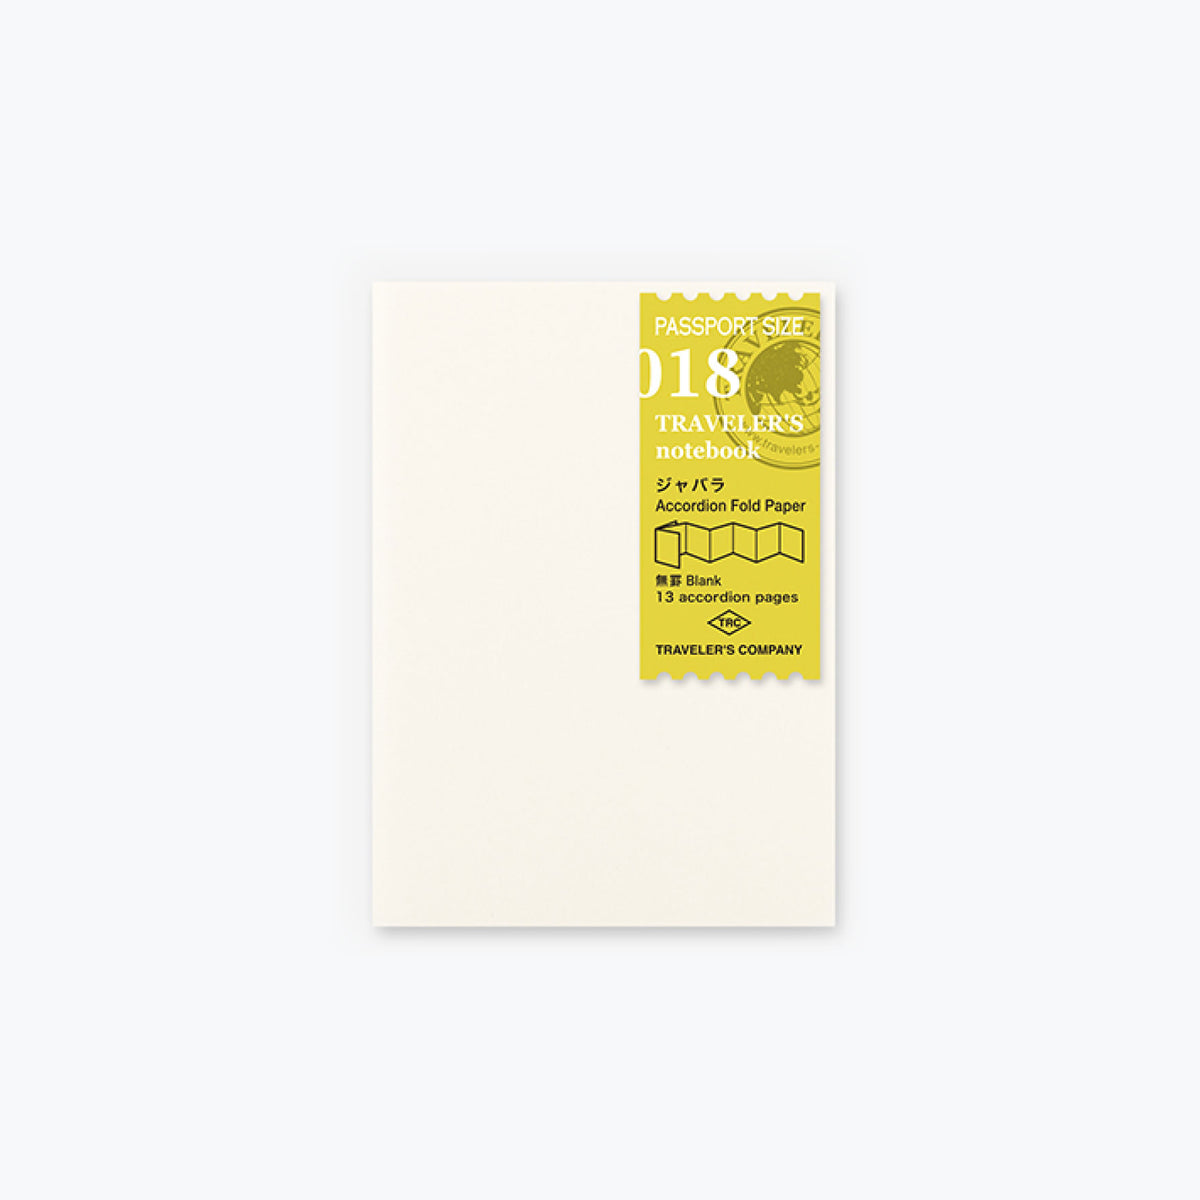 Traveler's Company - Inserts - Passport - 018 Accordion Fold Paper